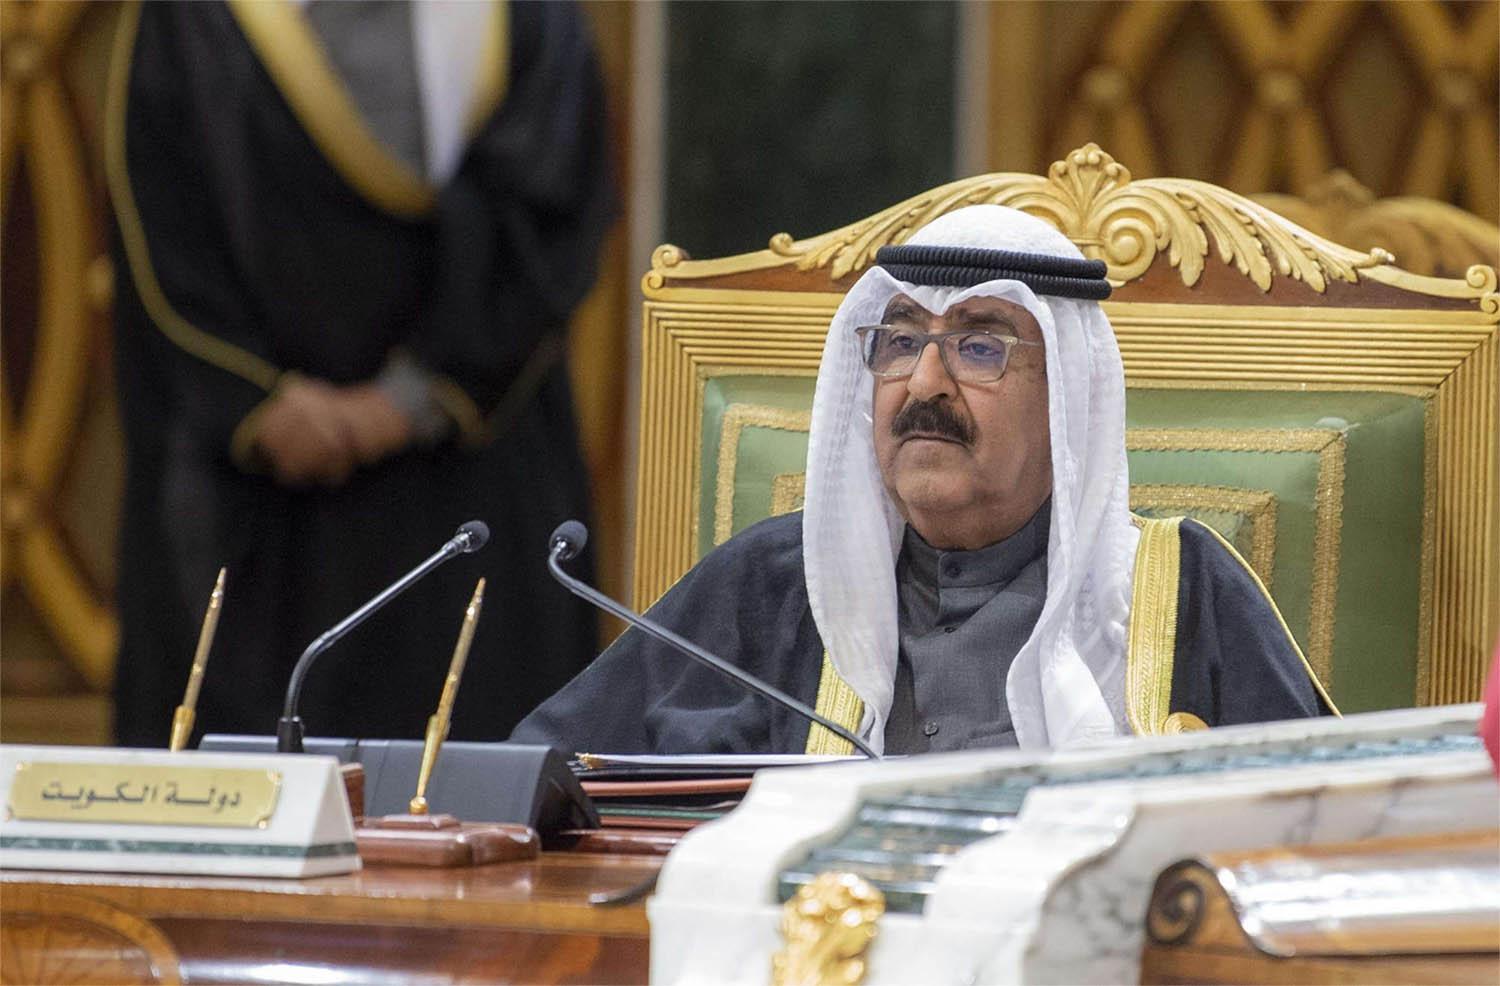 Kuwait's Crown Prince Sheikh Meshal al-Jaber al-Ahmad al-Sabah 